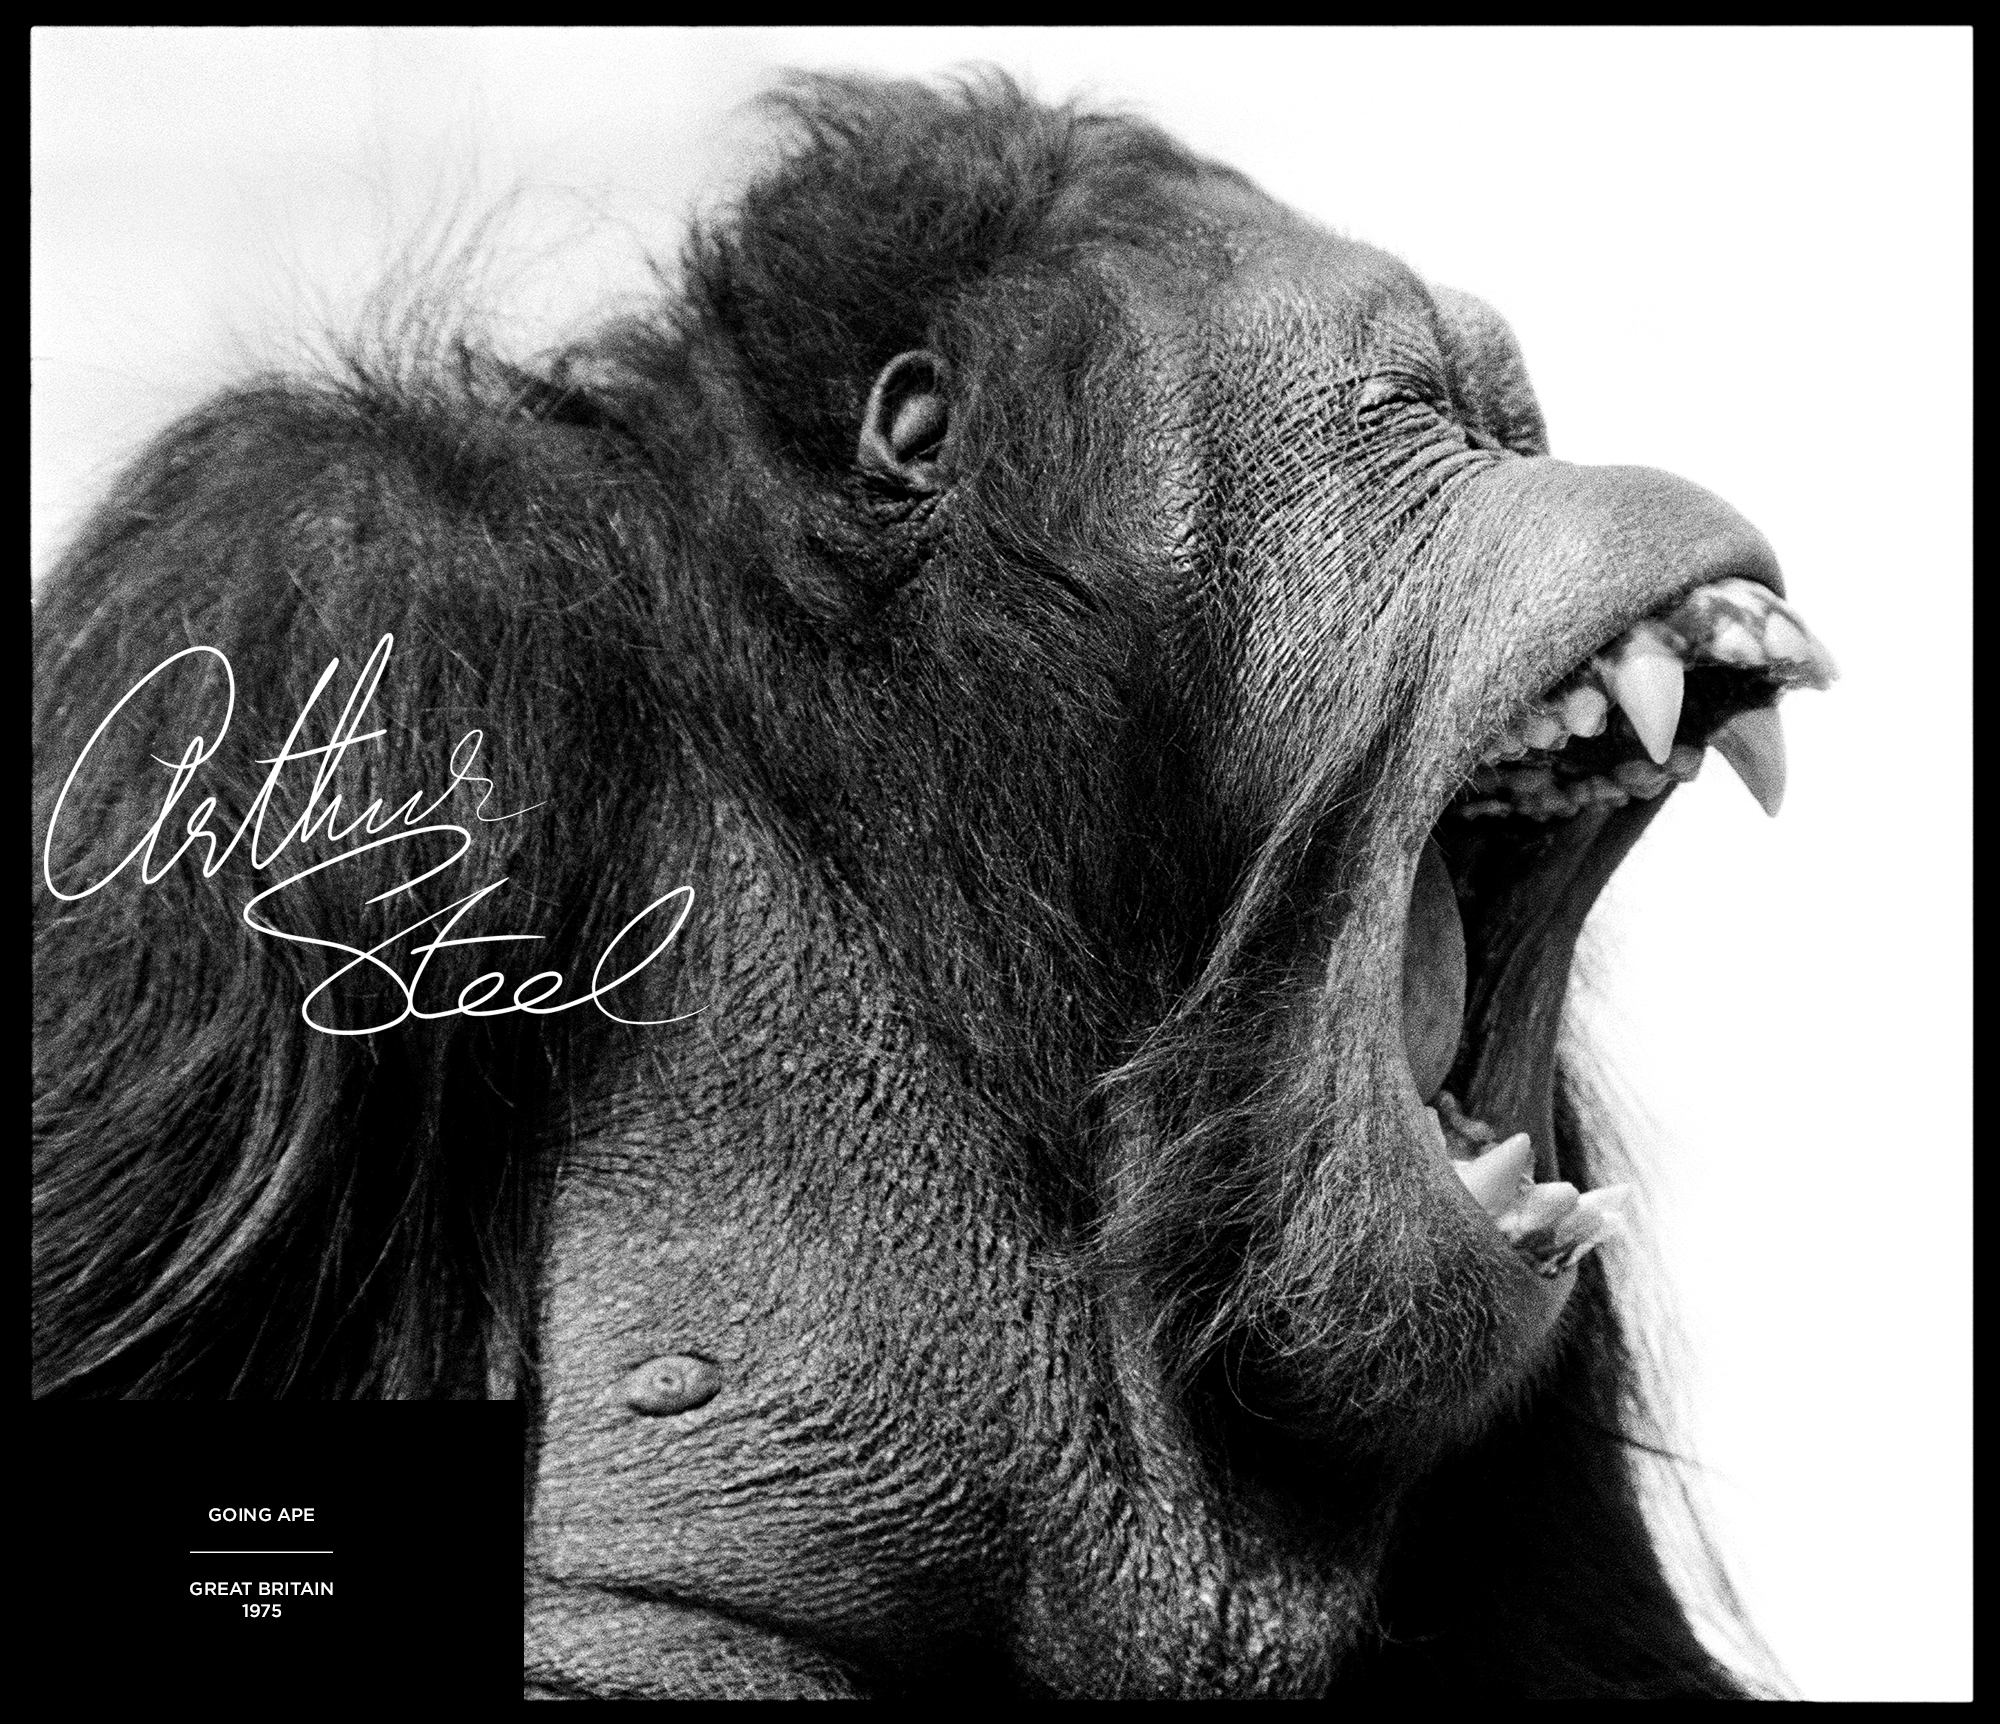 rare photograph orangutan going ape by arthur steel